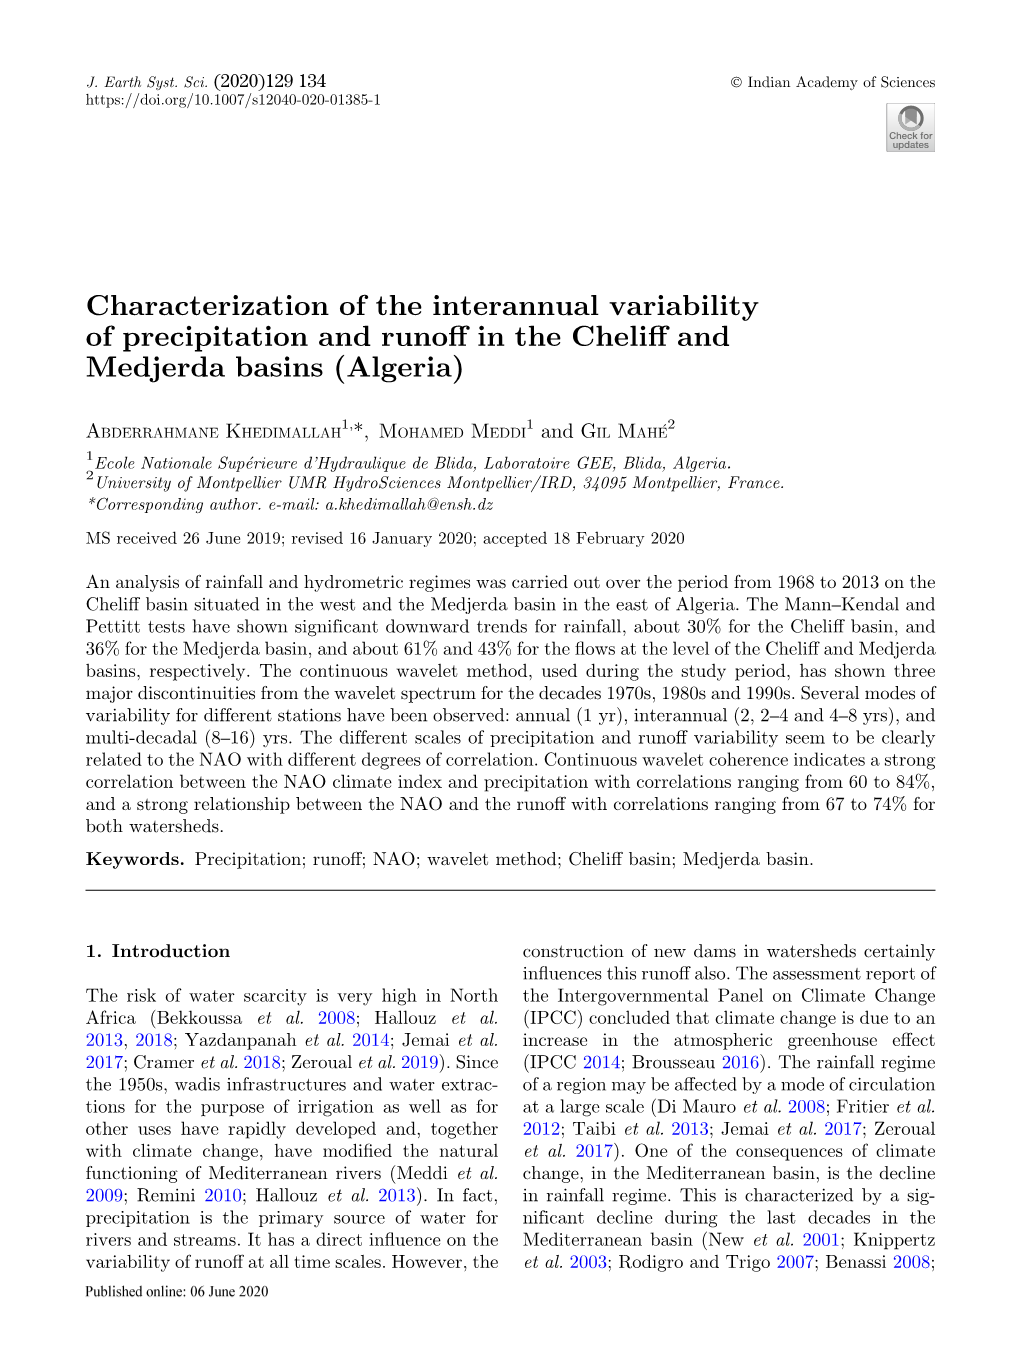 Characterization of the Interannual Variability of Precipitation and Runoa in the Chelia and Medjerda Basins (Algeria)